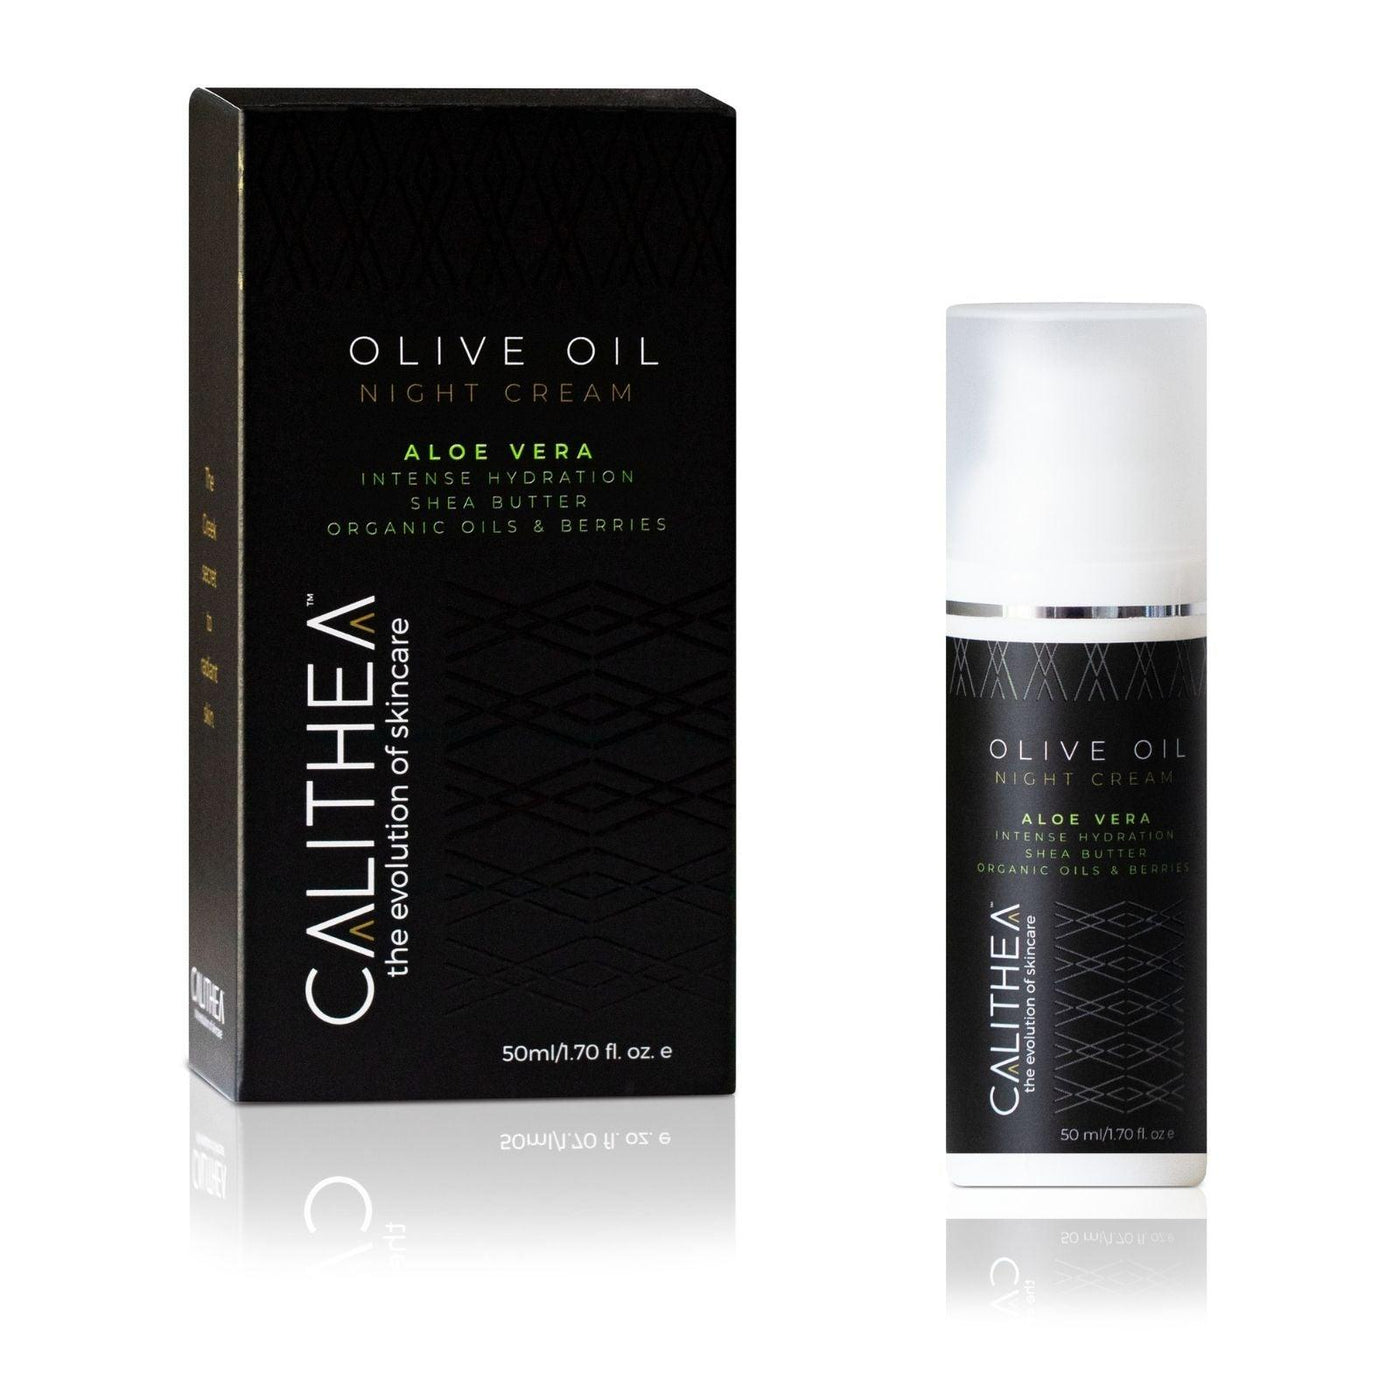 Olive Oil & Aloe Vera Night Cream - Intense Hydration Shea Butter w/ Organic Oils & Berries - 50mL